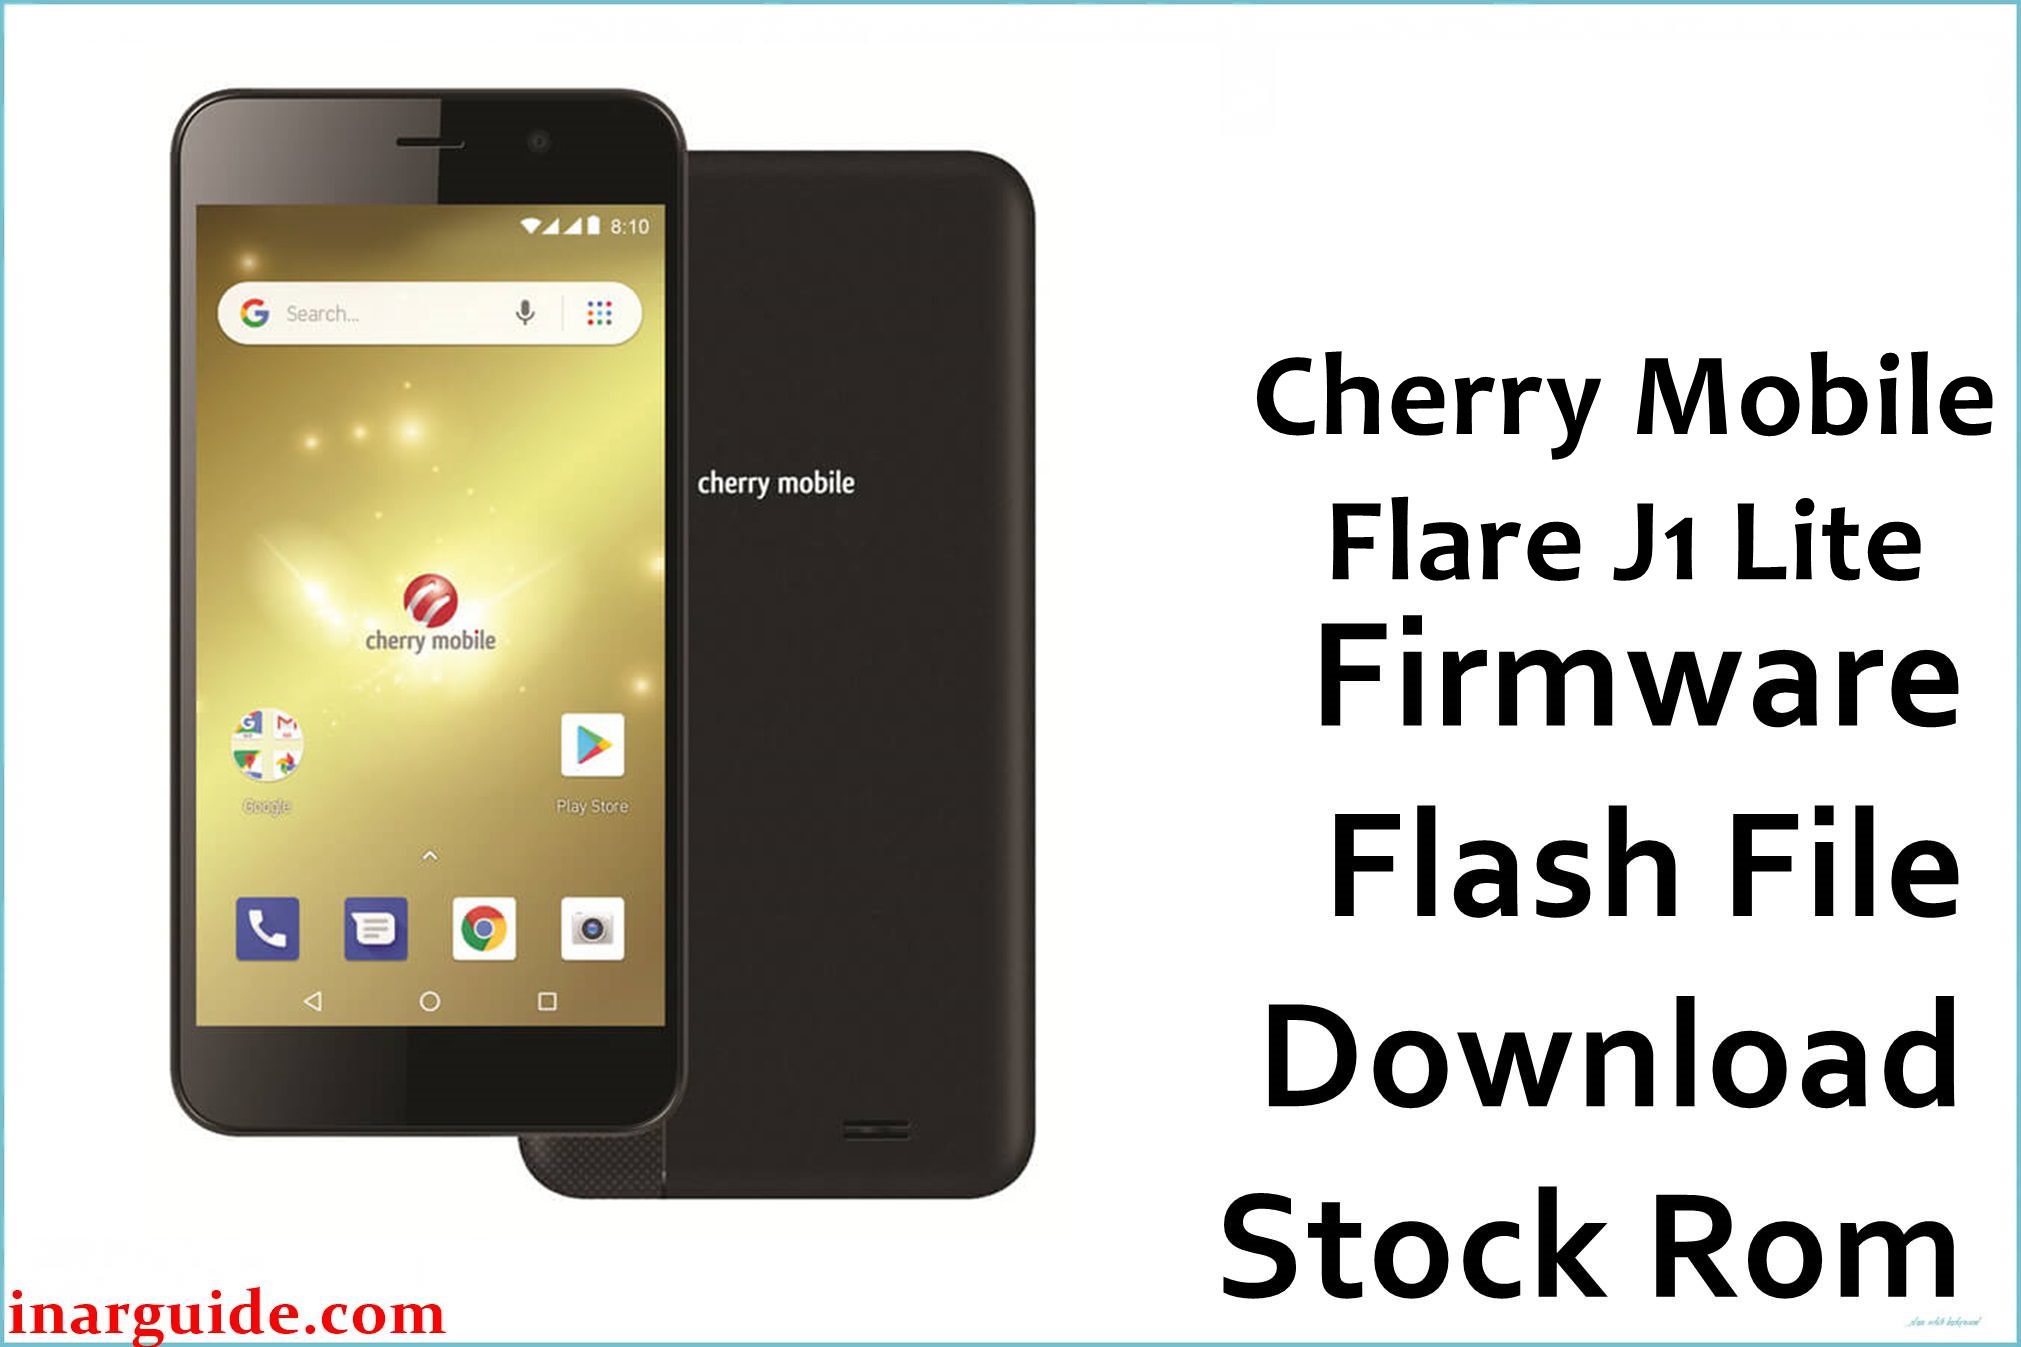 Cherry Mobile Flare J1 Lite